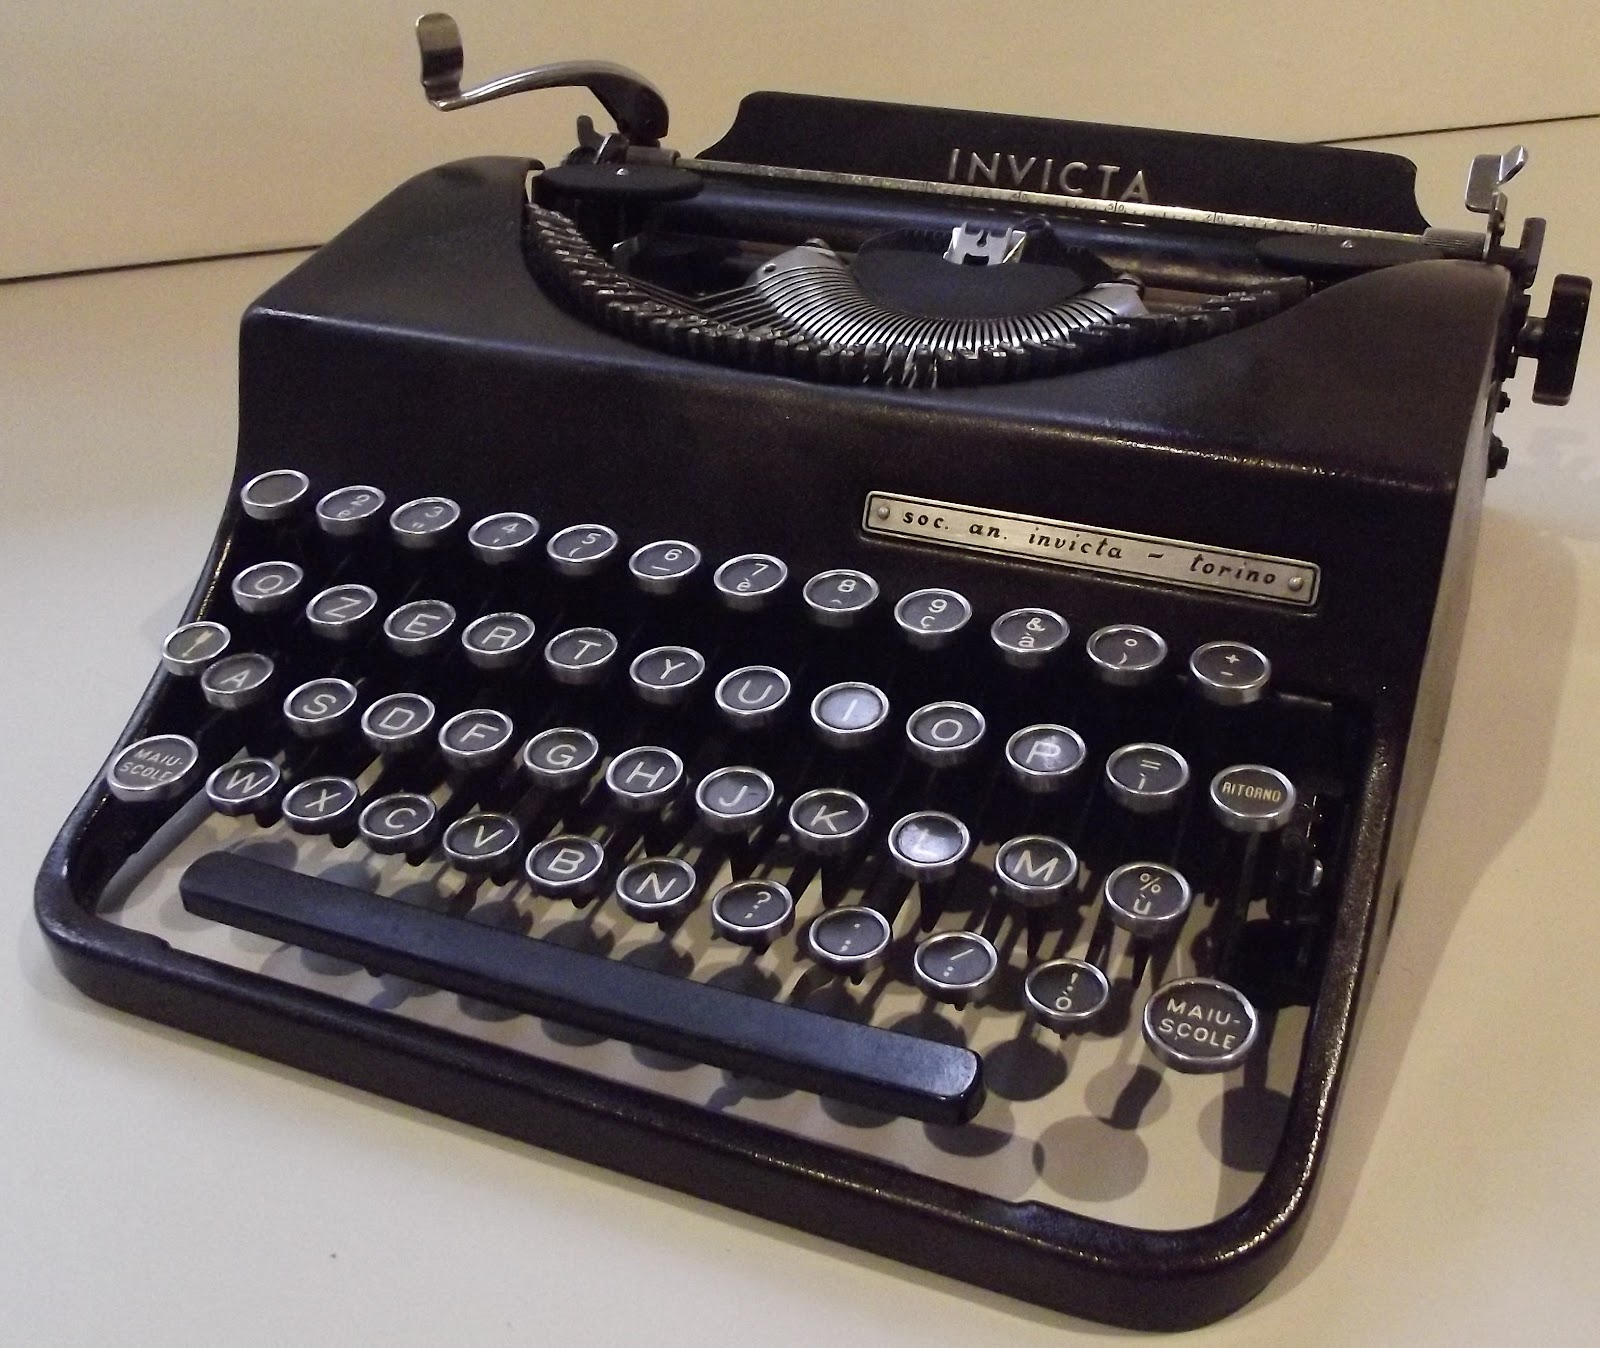 oz.Typewriter: The Invicta Portable Typewriter